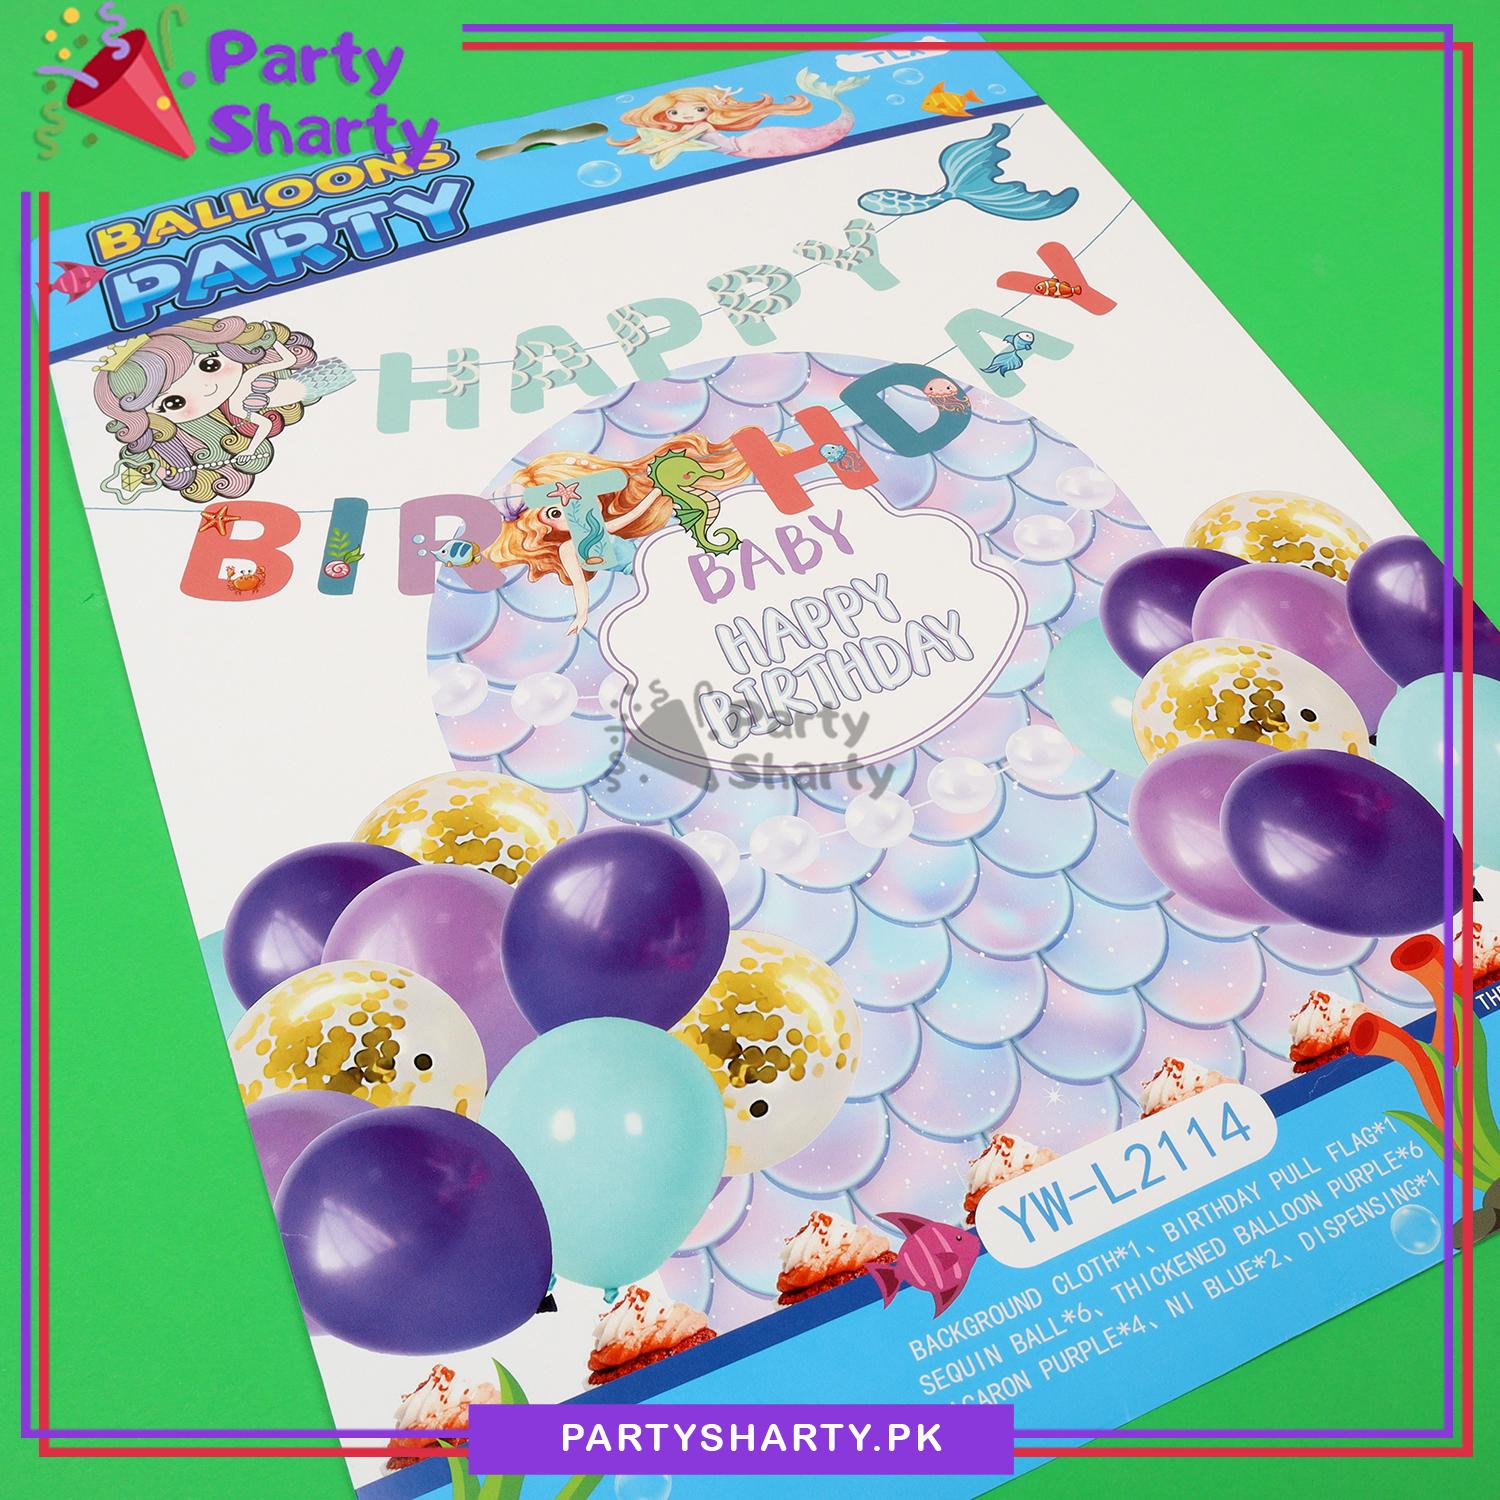 Happy Birthday Little Mermaid Theme Set For Theme Based Birthday Decoration & Celebration